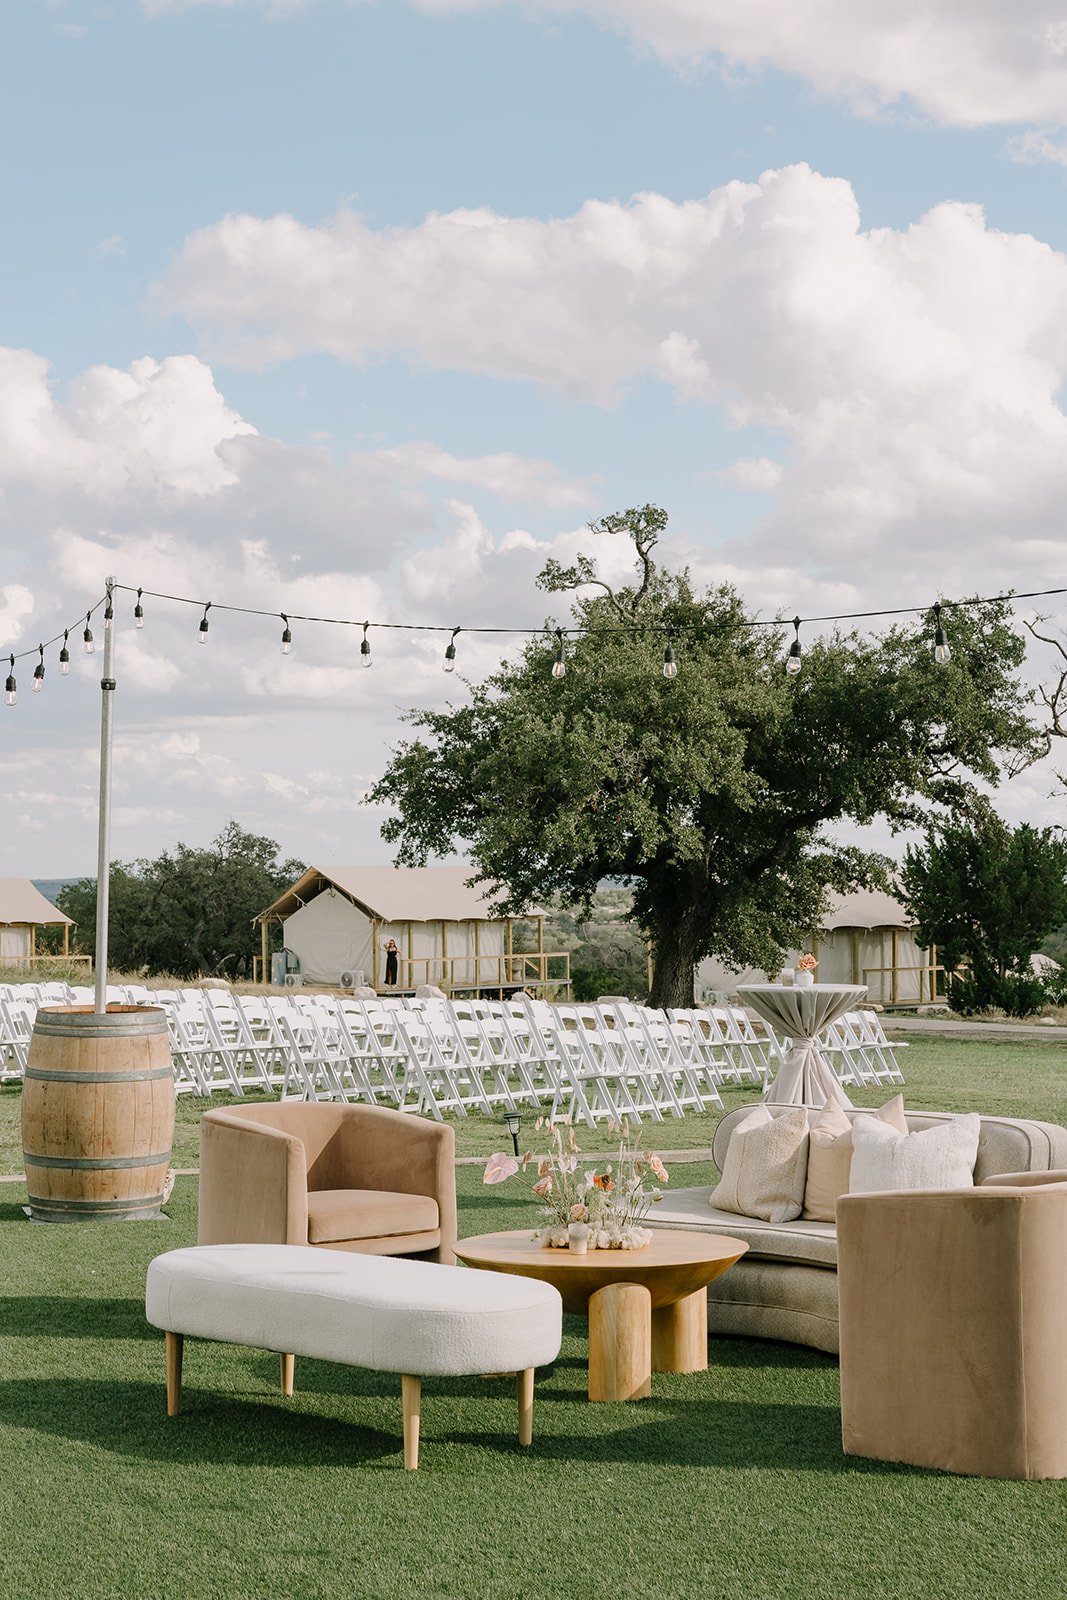 A Modern Barn Wedding Venue Camp Hideaway in TX - Texas Wedding Photography - Natalie Nicole Photo (1).jpg